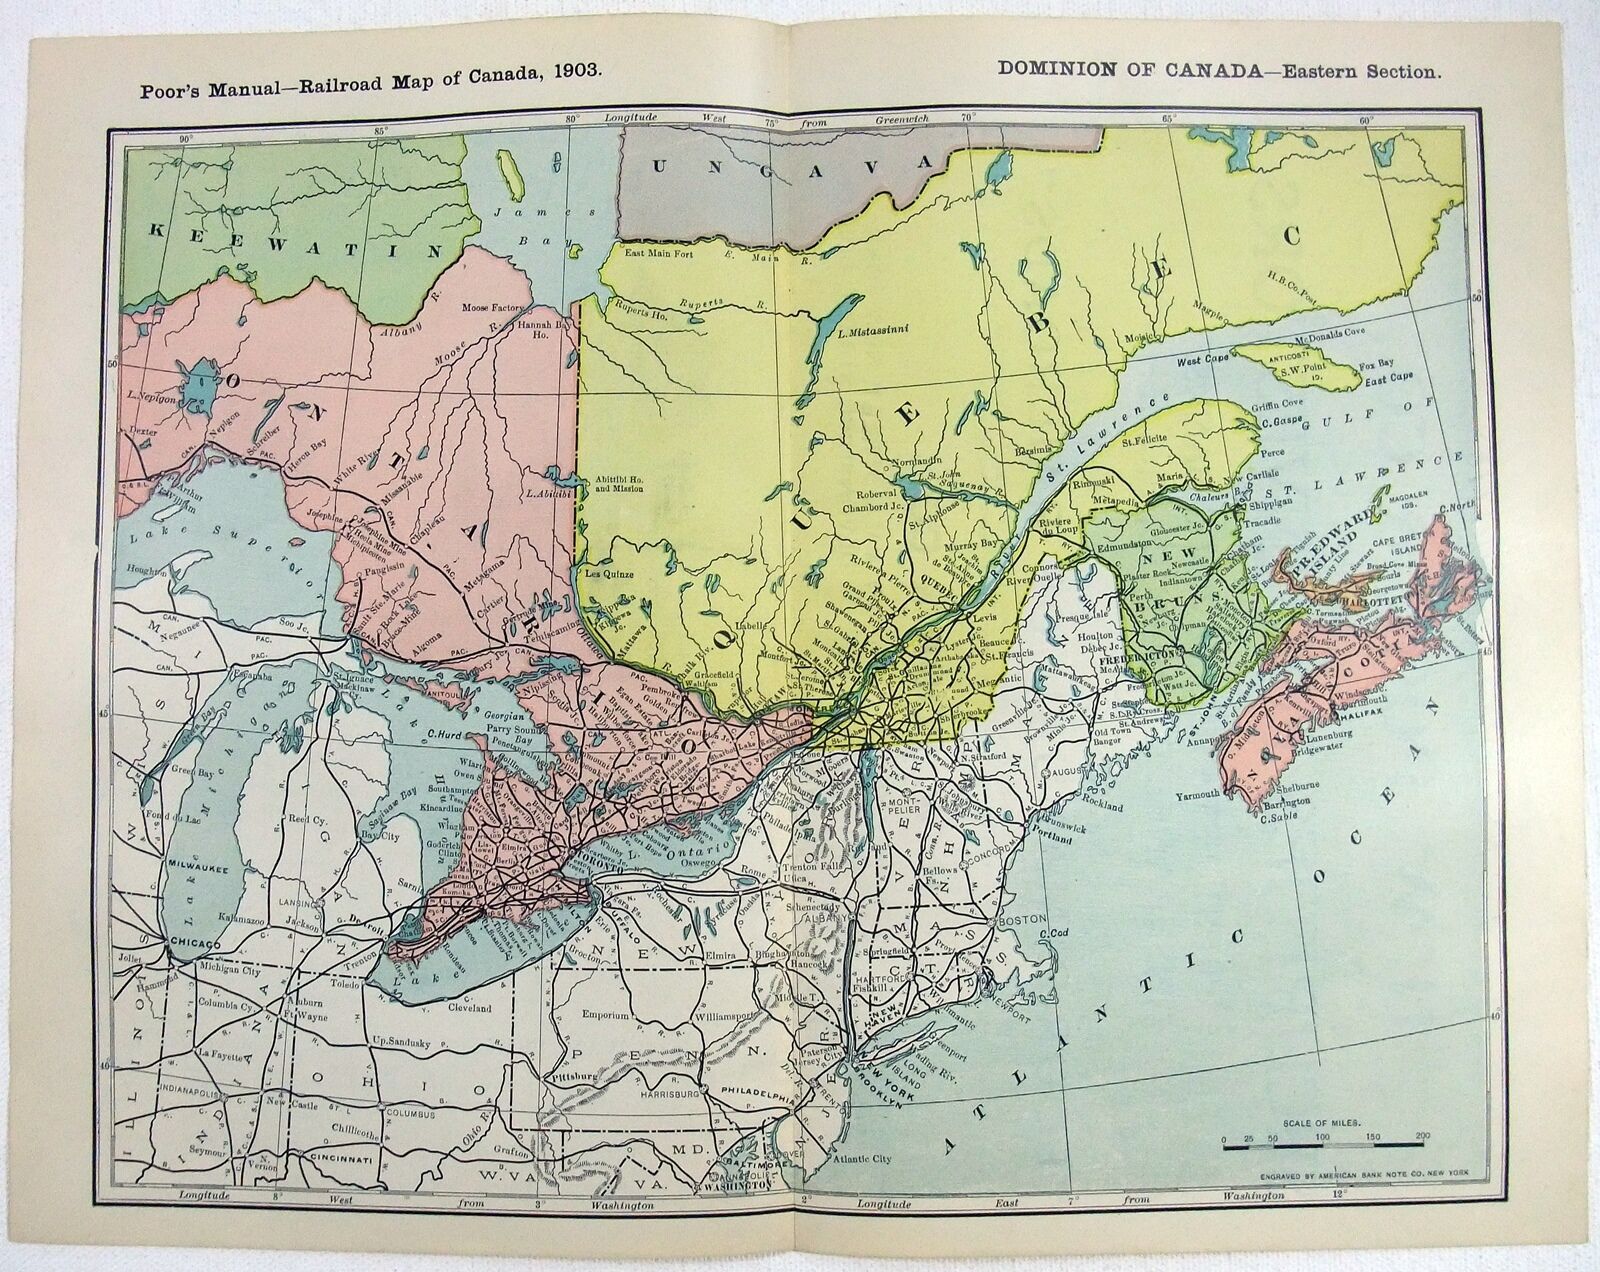 Eastern Canada - Original 1903 Railroad Map. Antique Railway